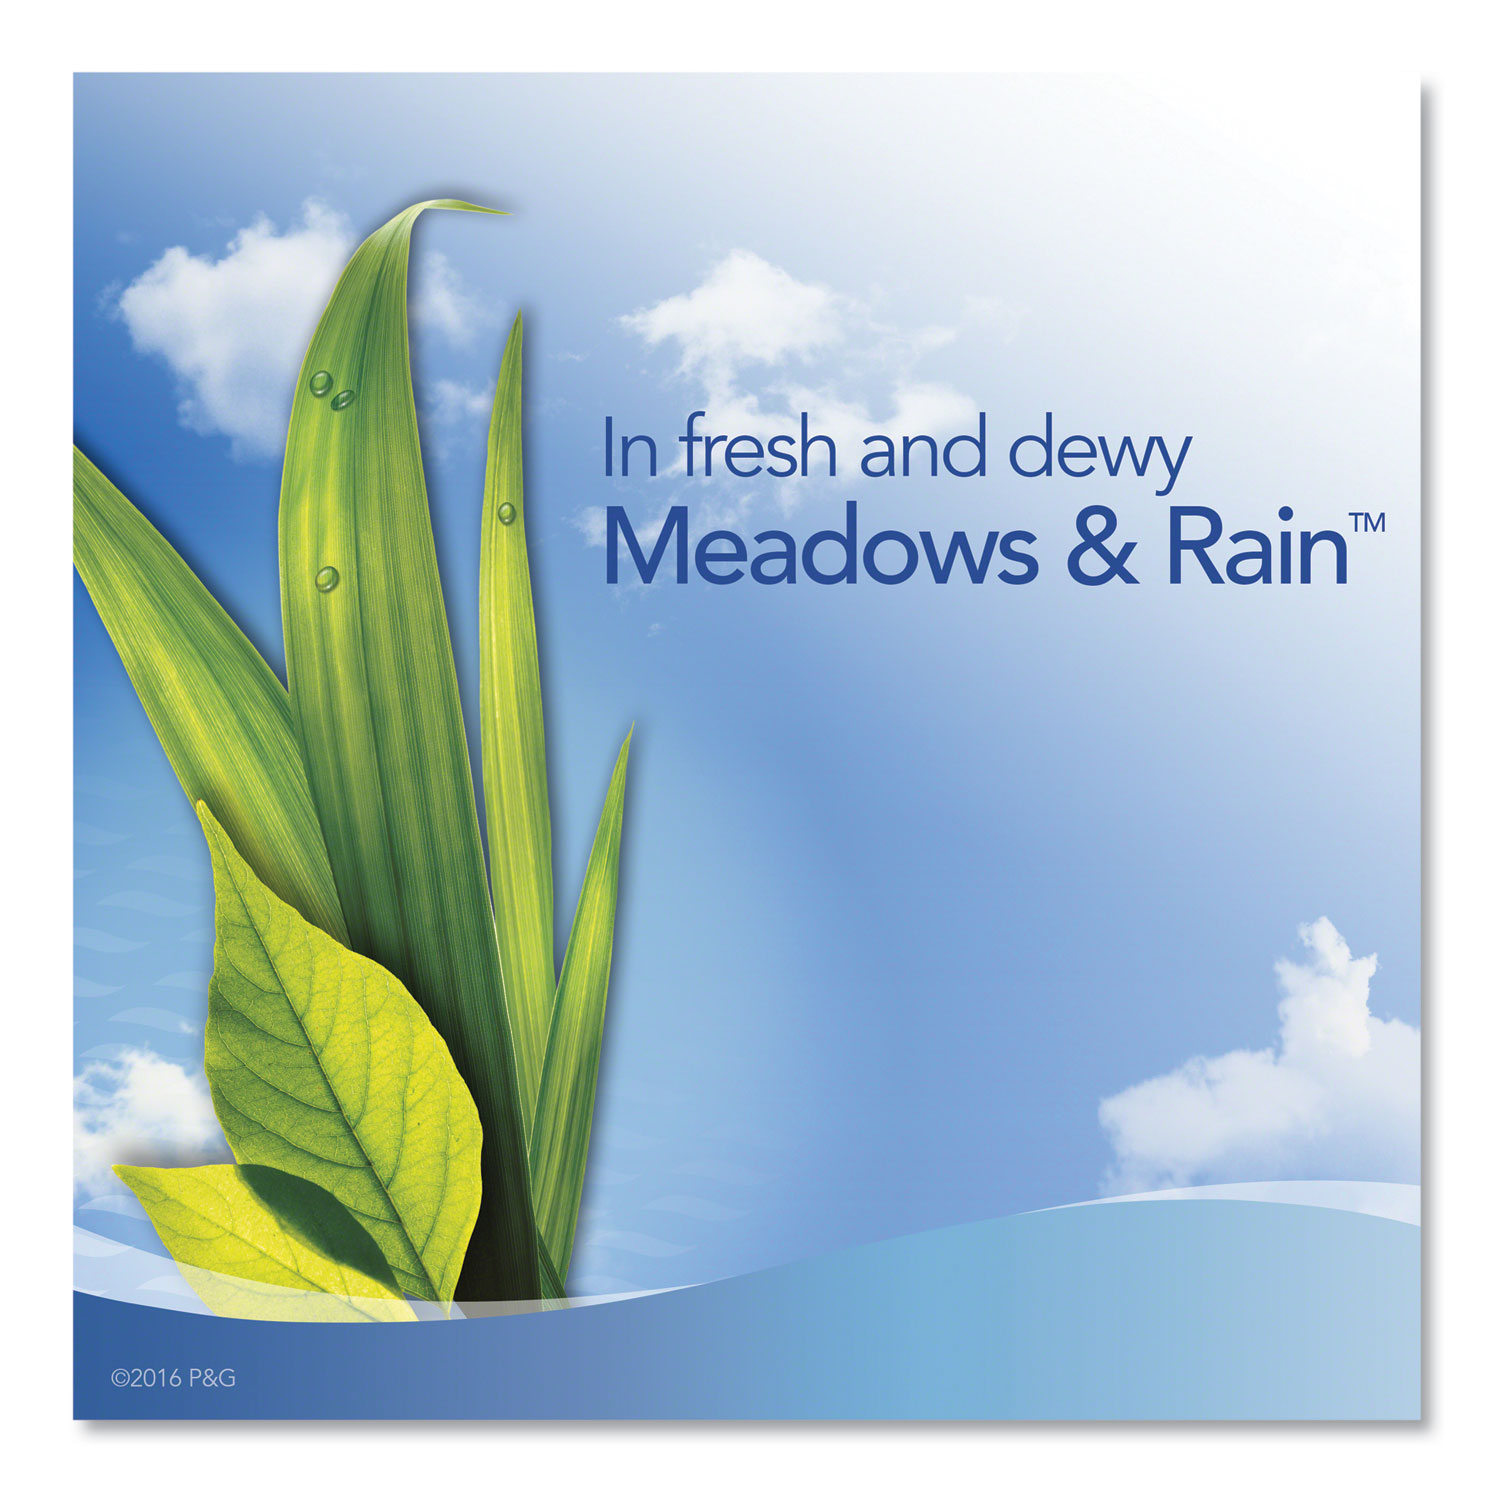 PLUG Air Freshener Refills, Meadows and Rain, 0.87 oz